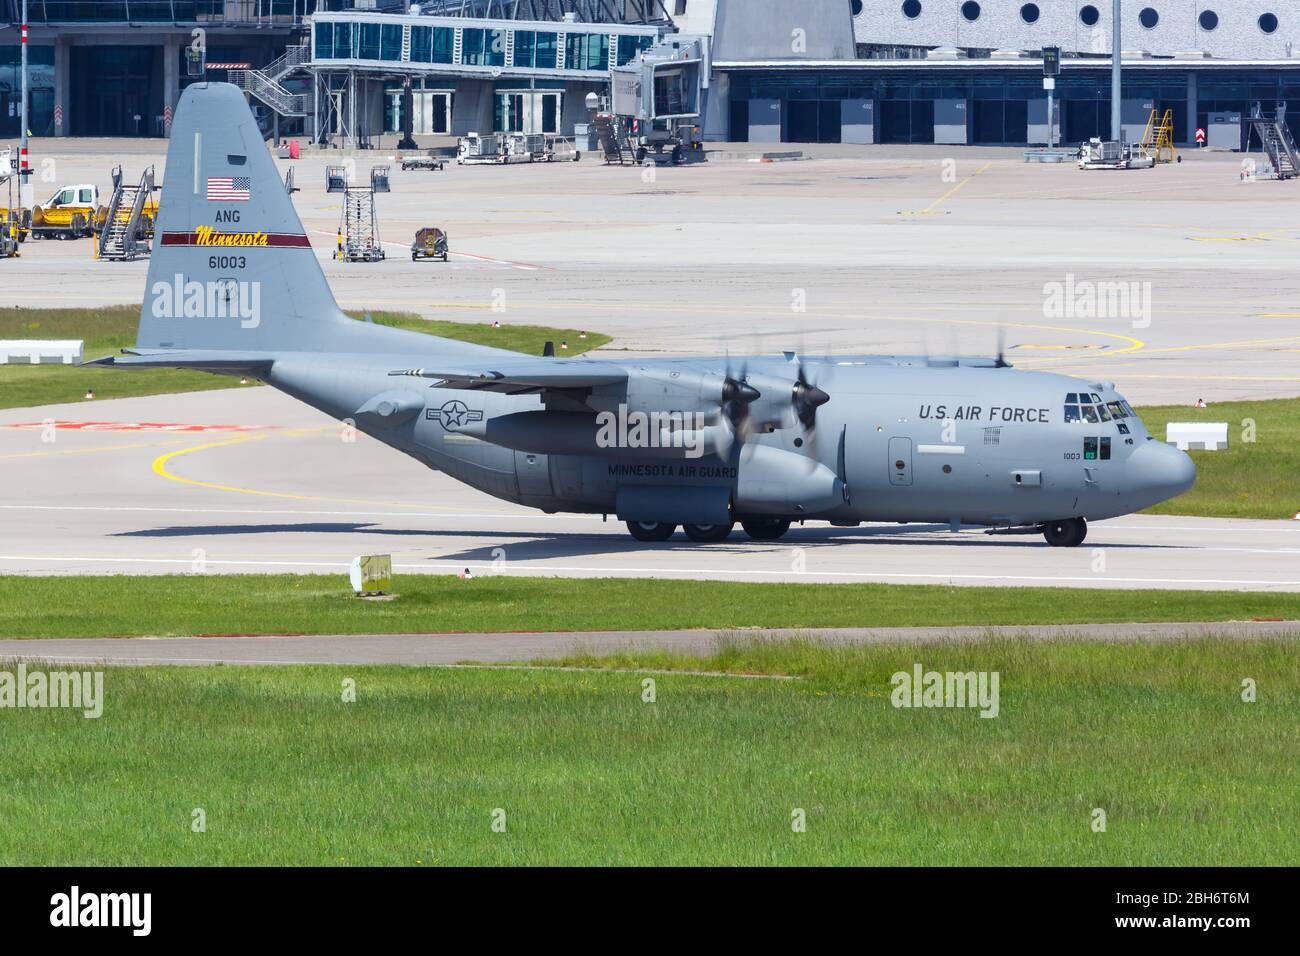 Stuttgart, Germany – May 23, 2019: U.S. Air Force Lockheed Hercules airplane at Stuttgart airport (STR) in Germany. Stock Photo